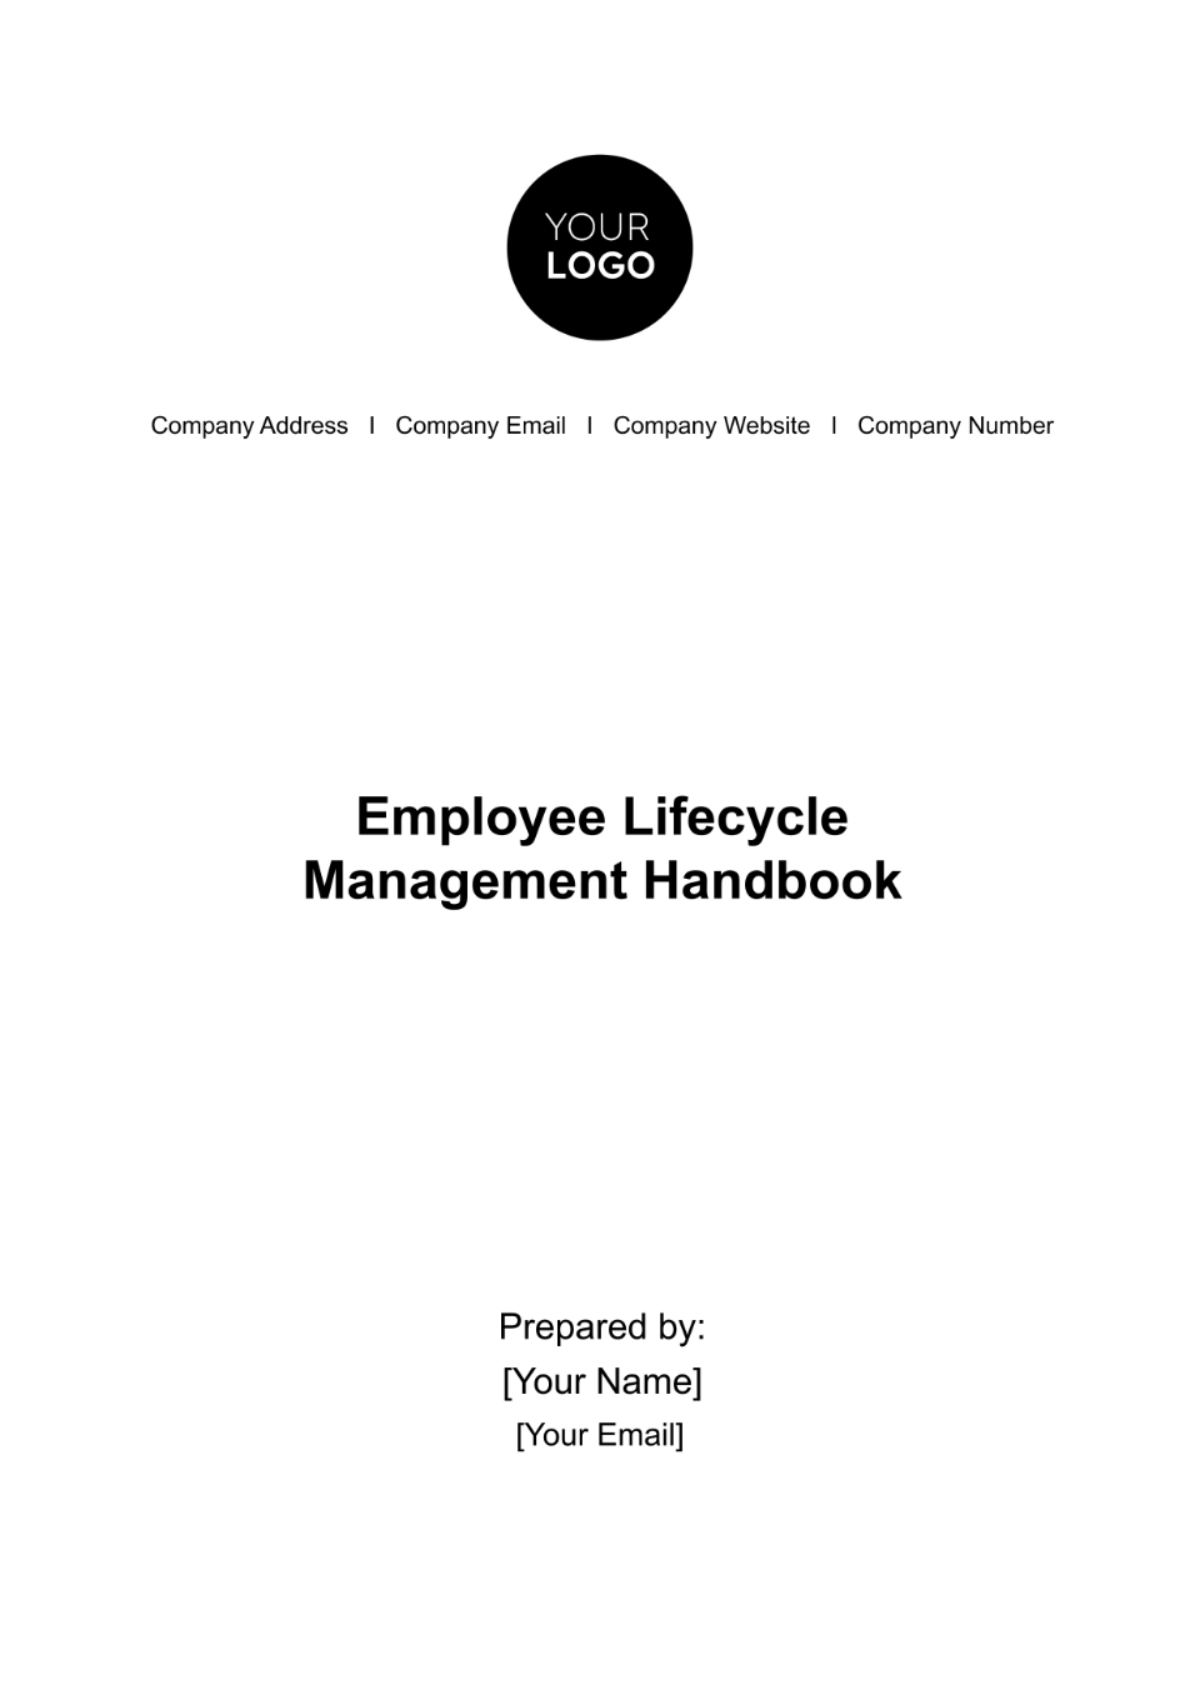 Free Employee Lifecycle Management Handbook HR Template